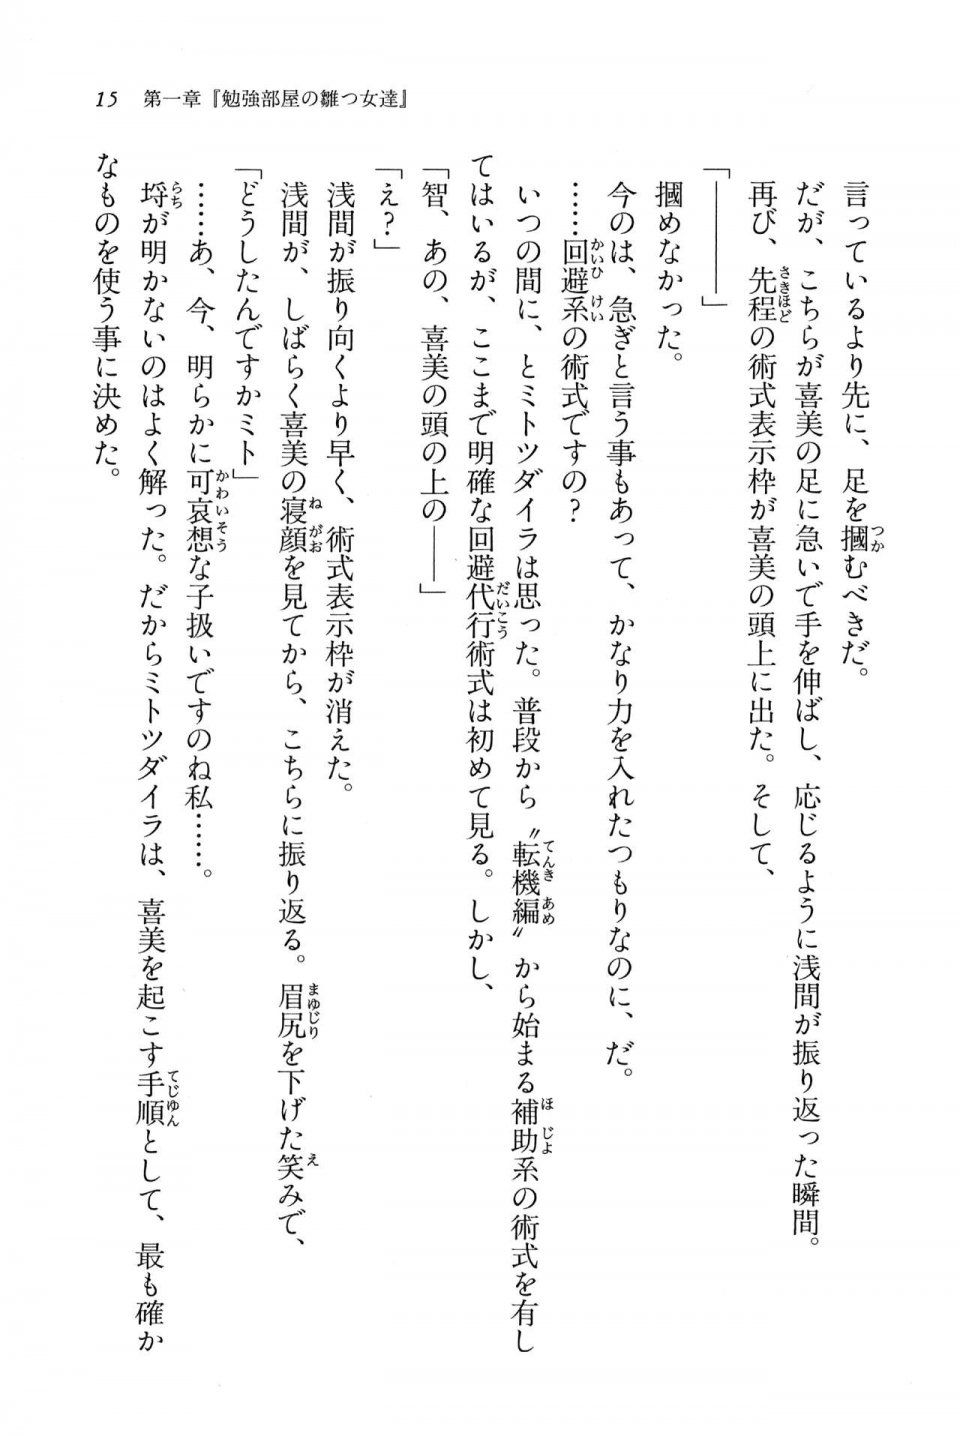 Kyoukai Senjou no Horizon BD Special Mininovel Vol 7(4A) - Photo #19